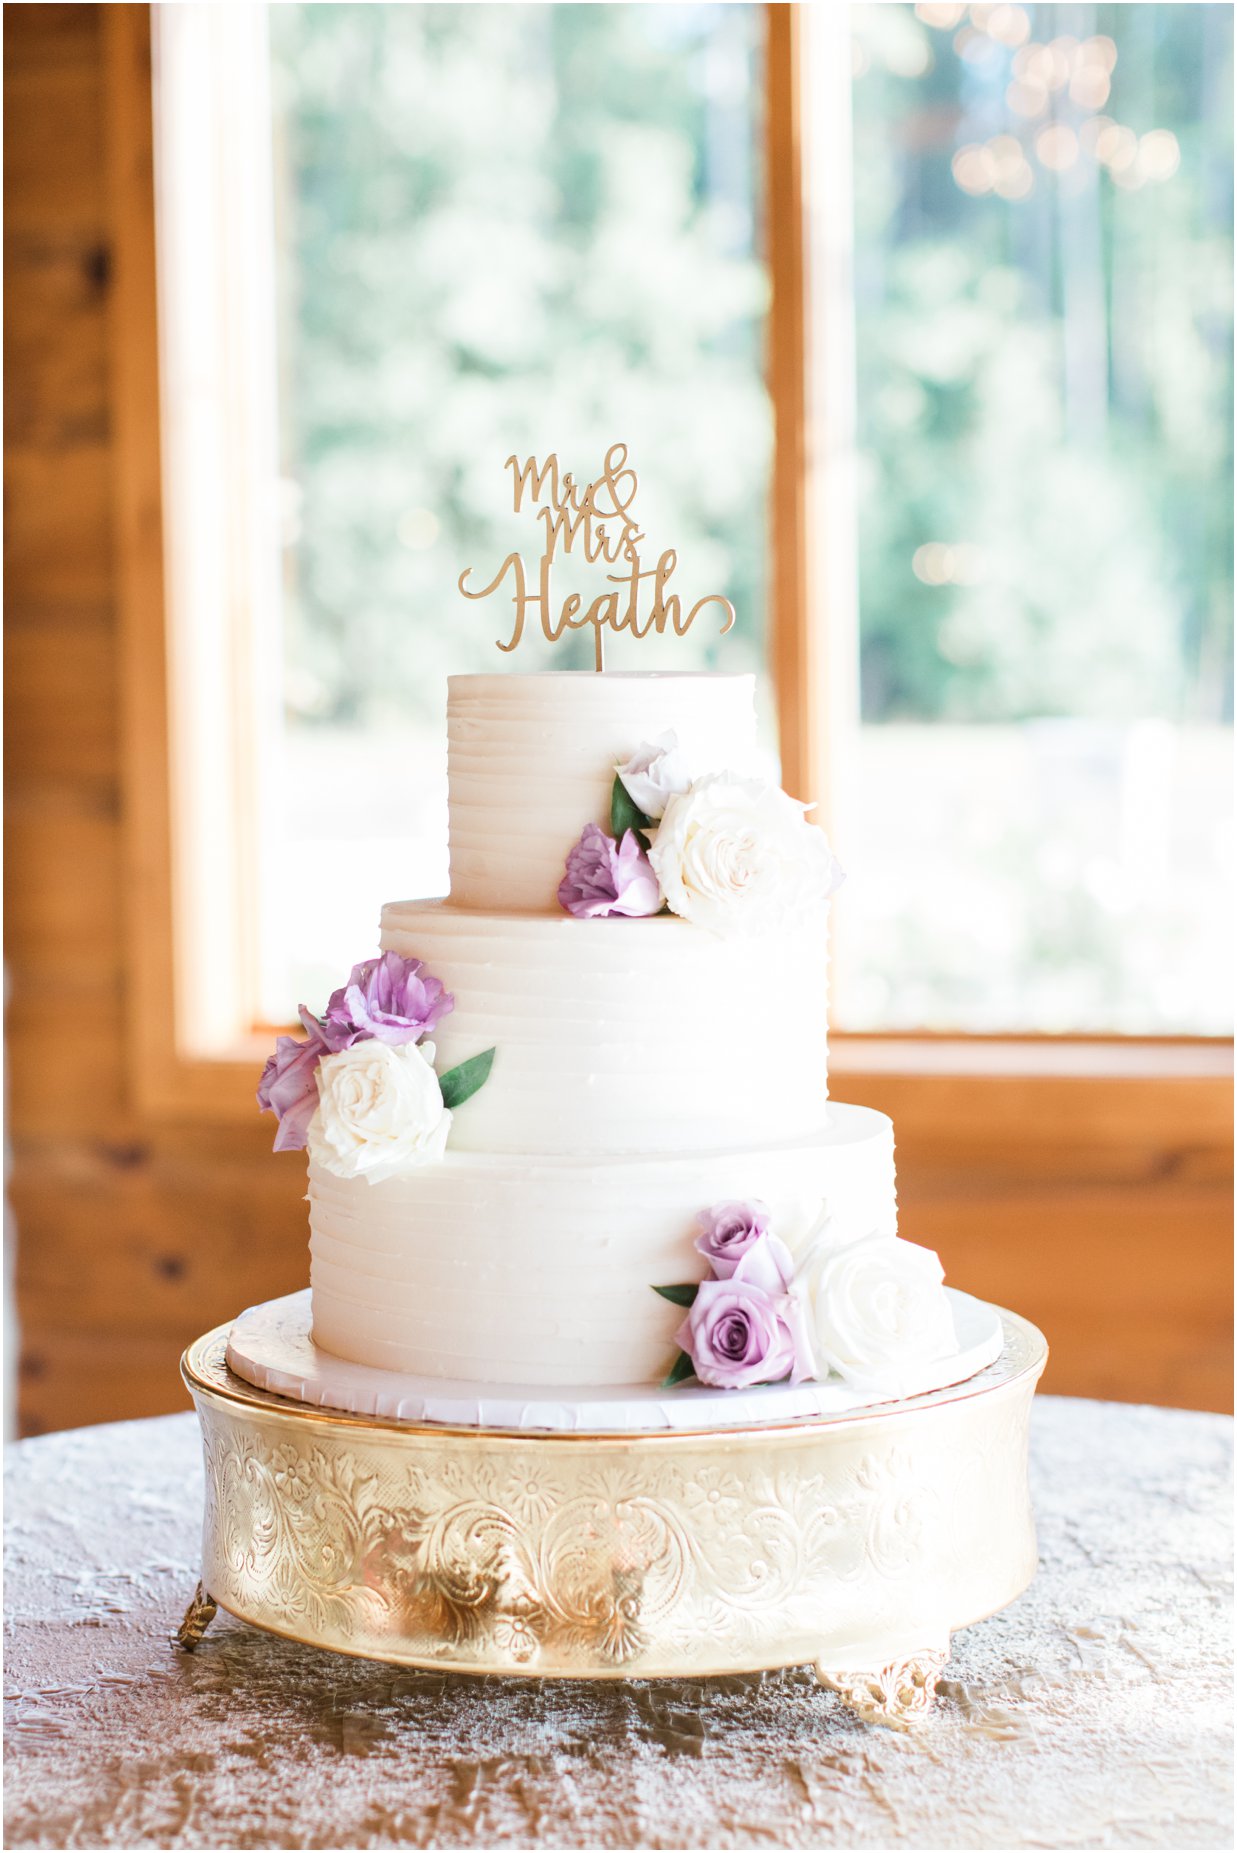 Lavender and White wedding cake